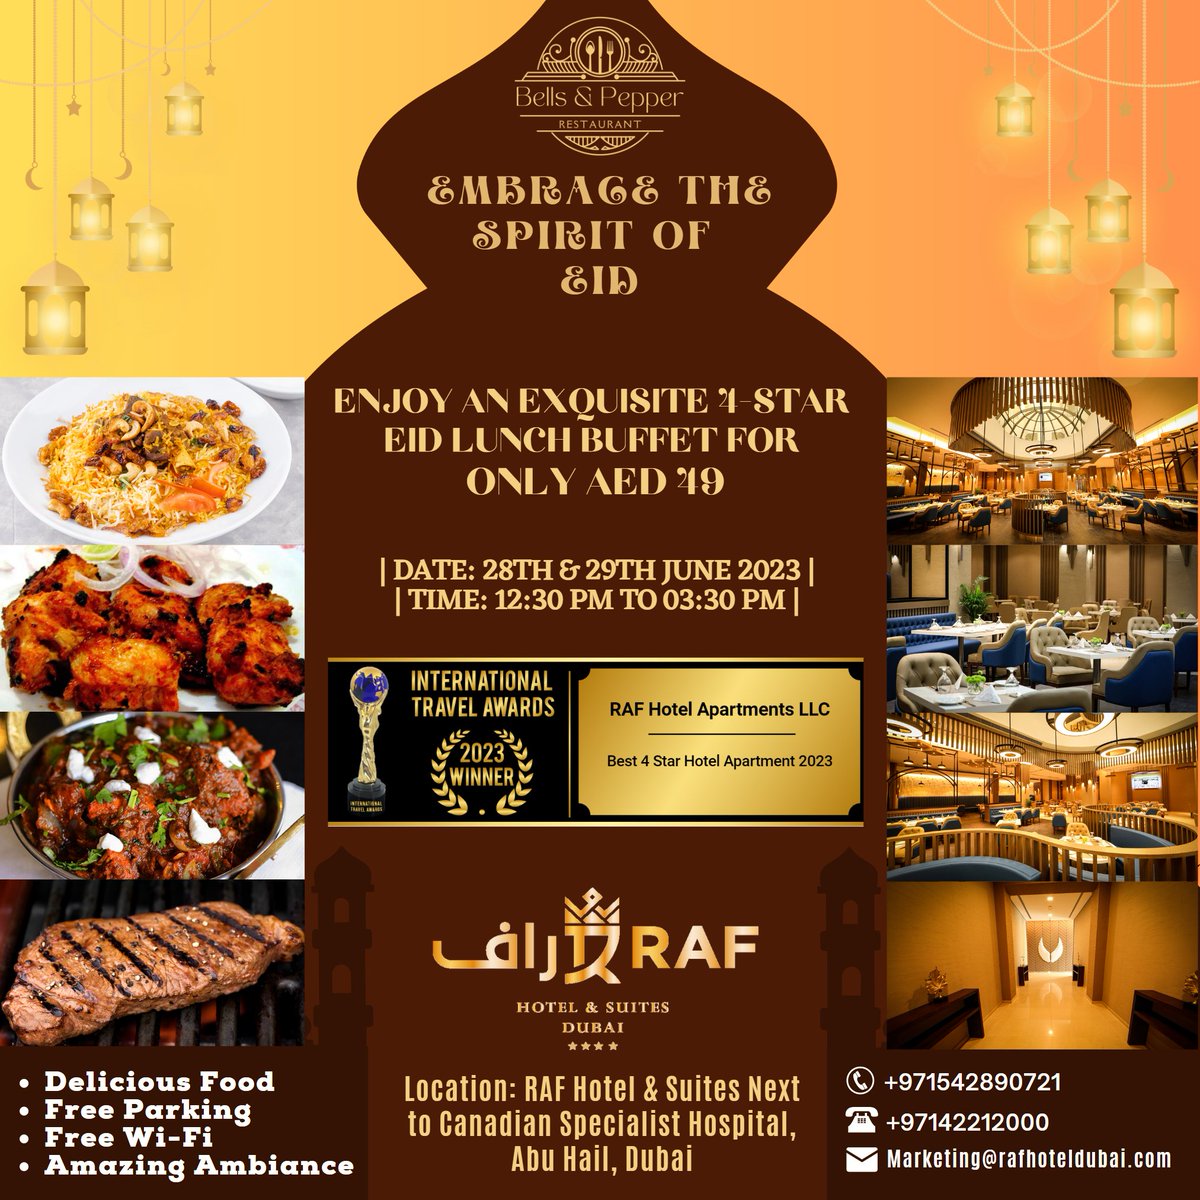 Enjoy an exquisite 4-Star EID Lunch buffet For Only AED 49!!

#RAFHotelDubai #Eid2023 #EidInDubai #Buffet #EidBuffet #eidholidays #EidVacation #EidOffer #eiddiscount #HotelInEid #Eid #RAFHotelAndSuites #DubaiOffer #DubaiHotel #lunch #lunchBuffet #DubaiFood #VisitDubai